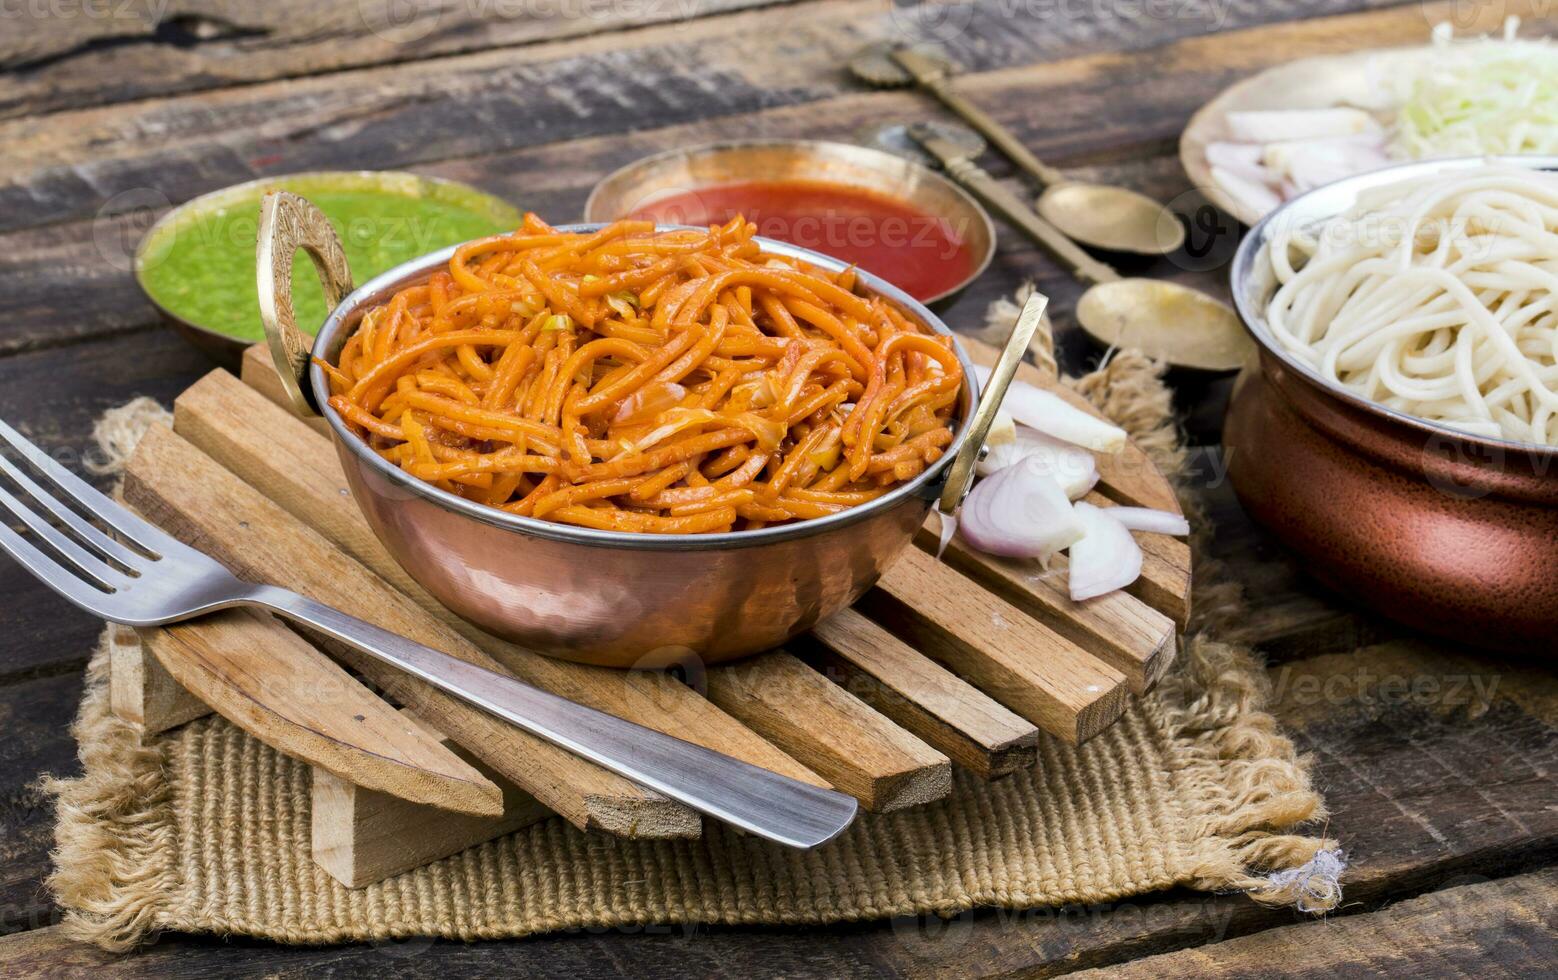 picante frito vegetal verduras perro chino mein en de madera mesa foto